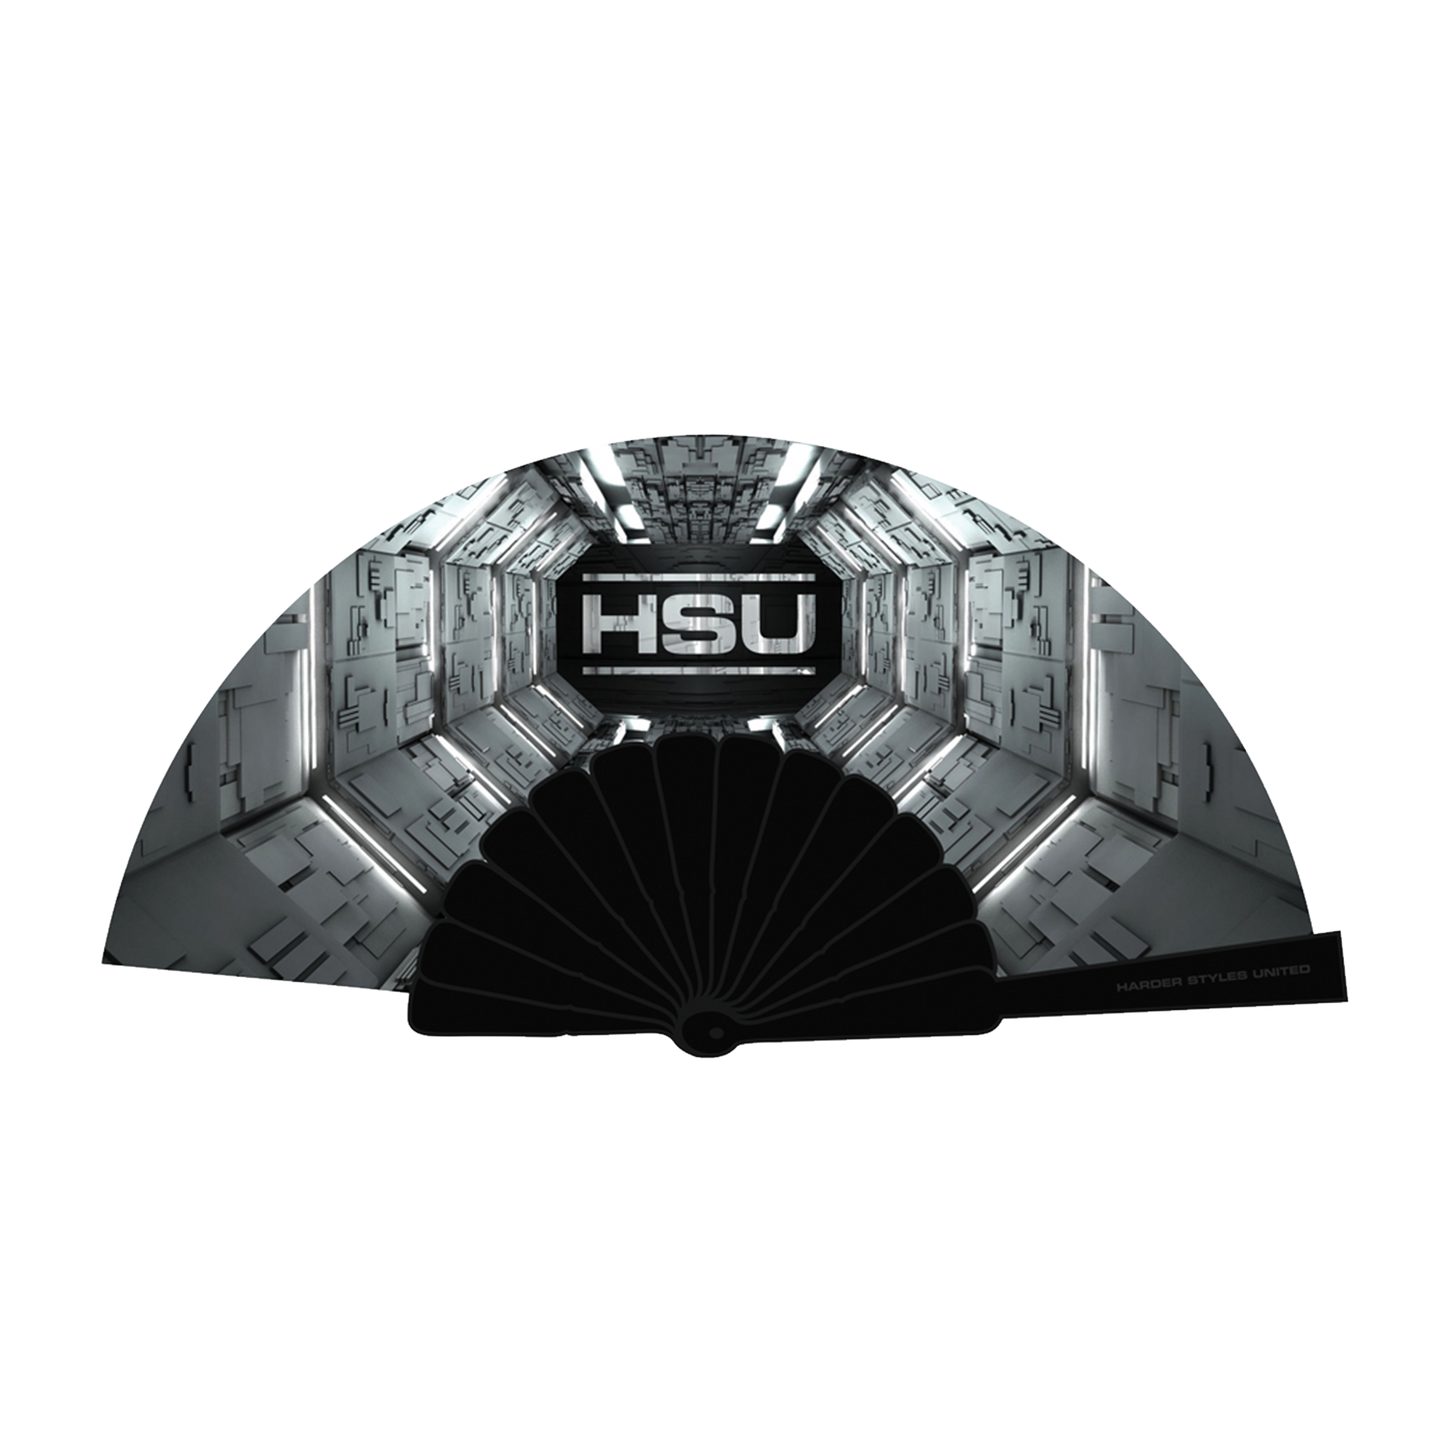 HSU Logo Large Handfan x Futuristic